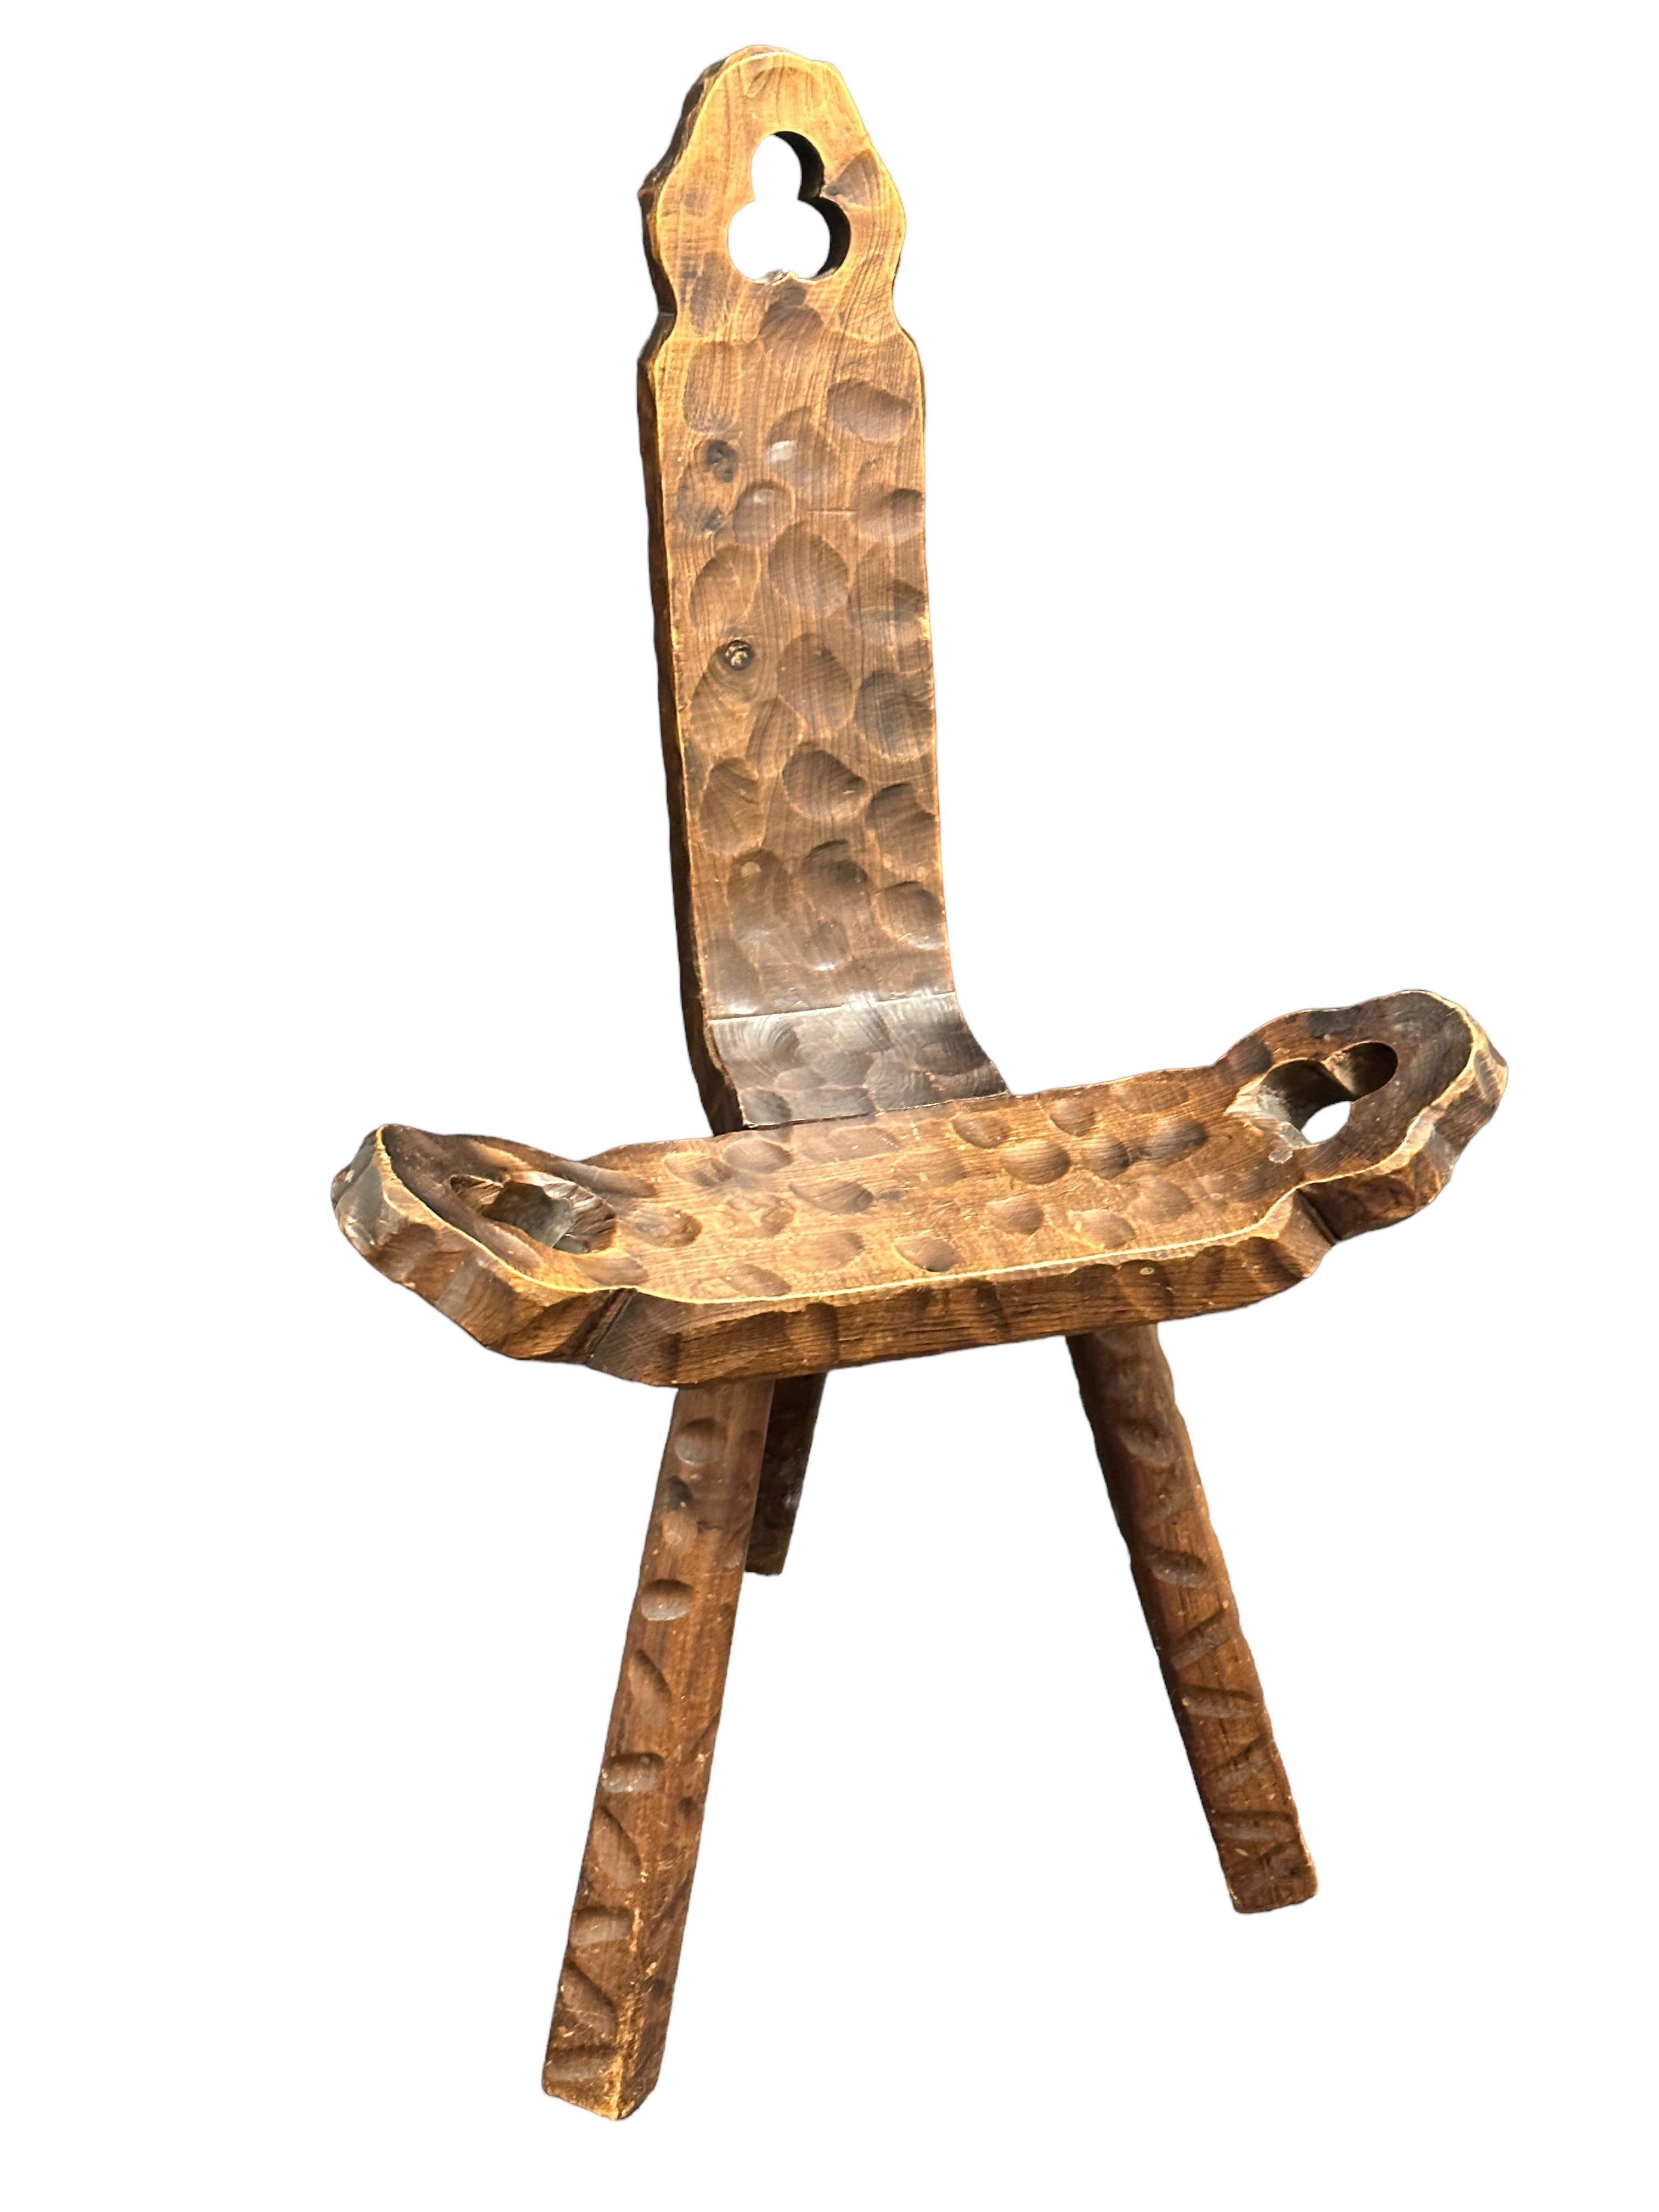 Spanish Mid-Century Modern Brutalist Sculptural Wood Tripod Chair, Spain Vintage 1970s For Sale